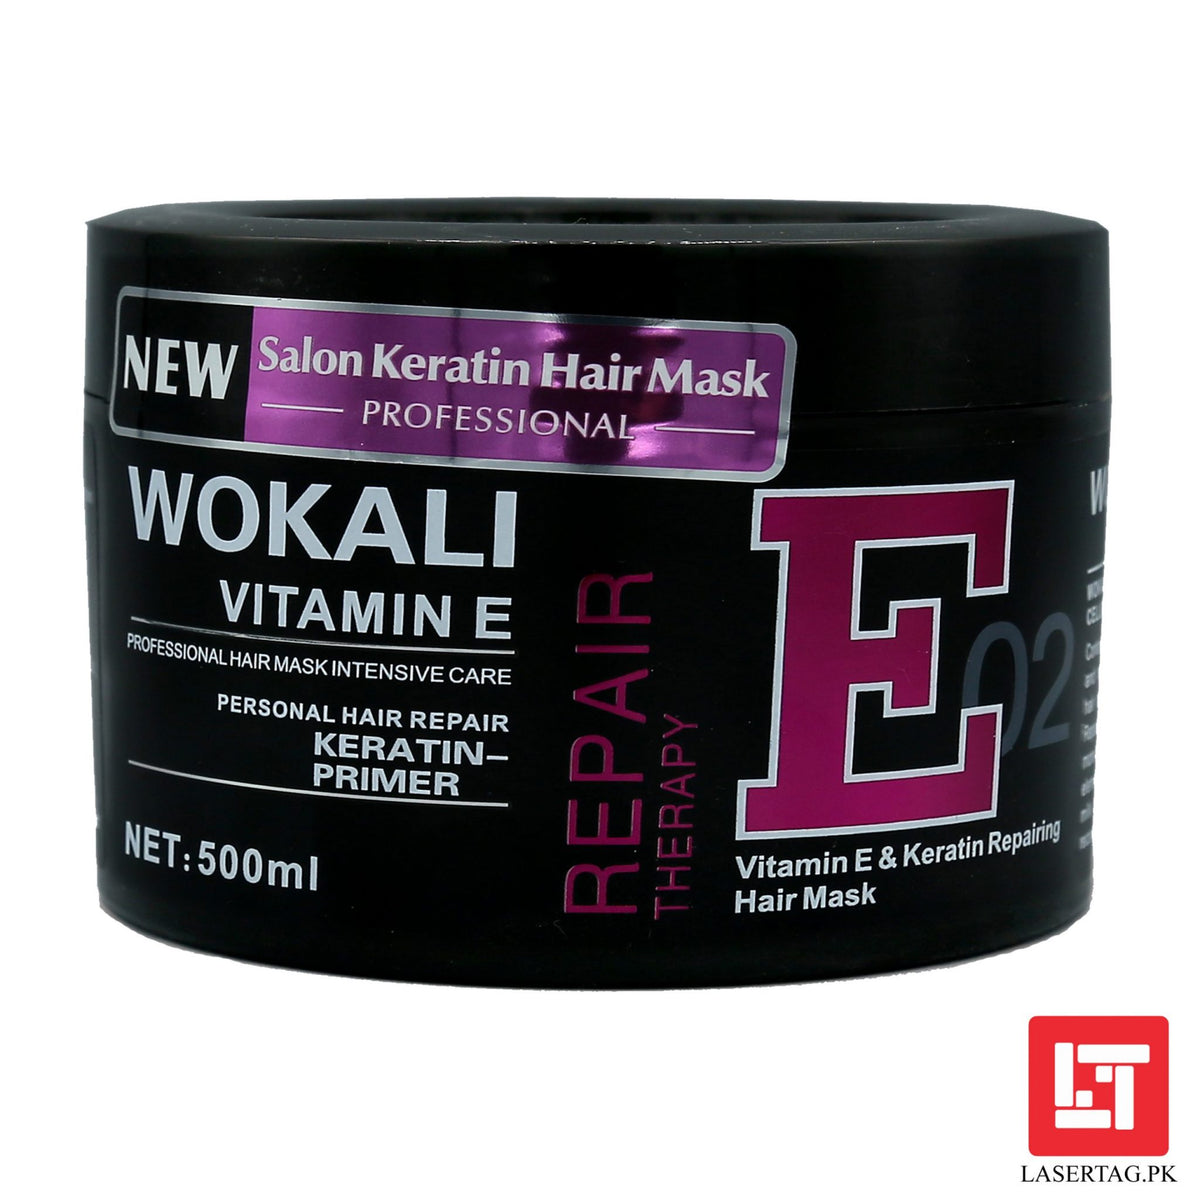 Wokali Hair Mask Vitamin E Repair Therapy Keratin Primer Purple 500g freeshipping - lasertag.pk